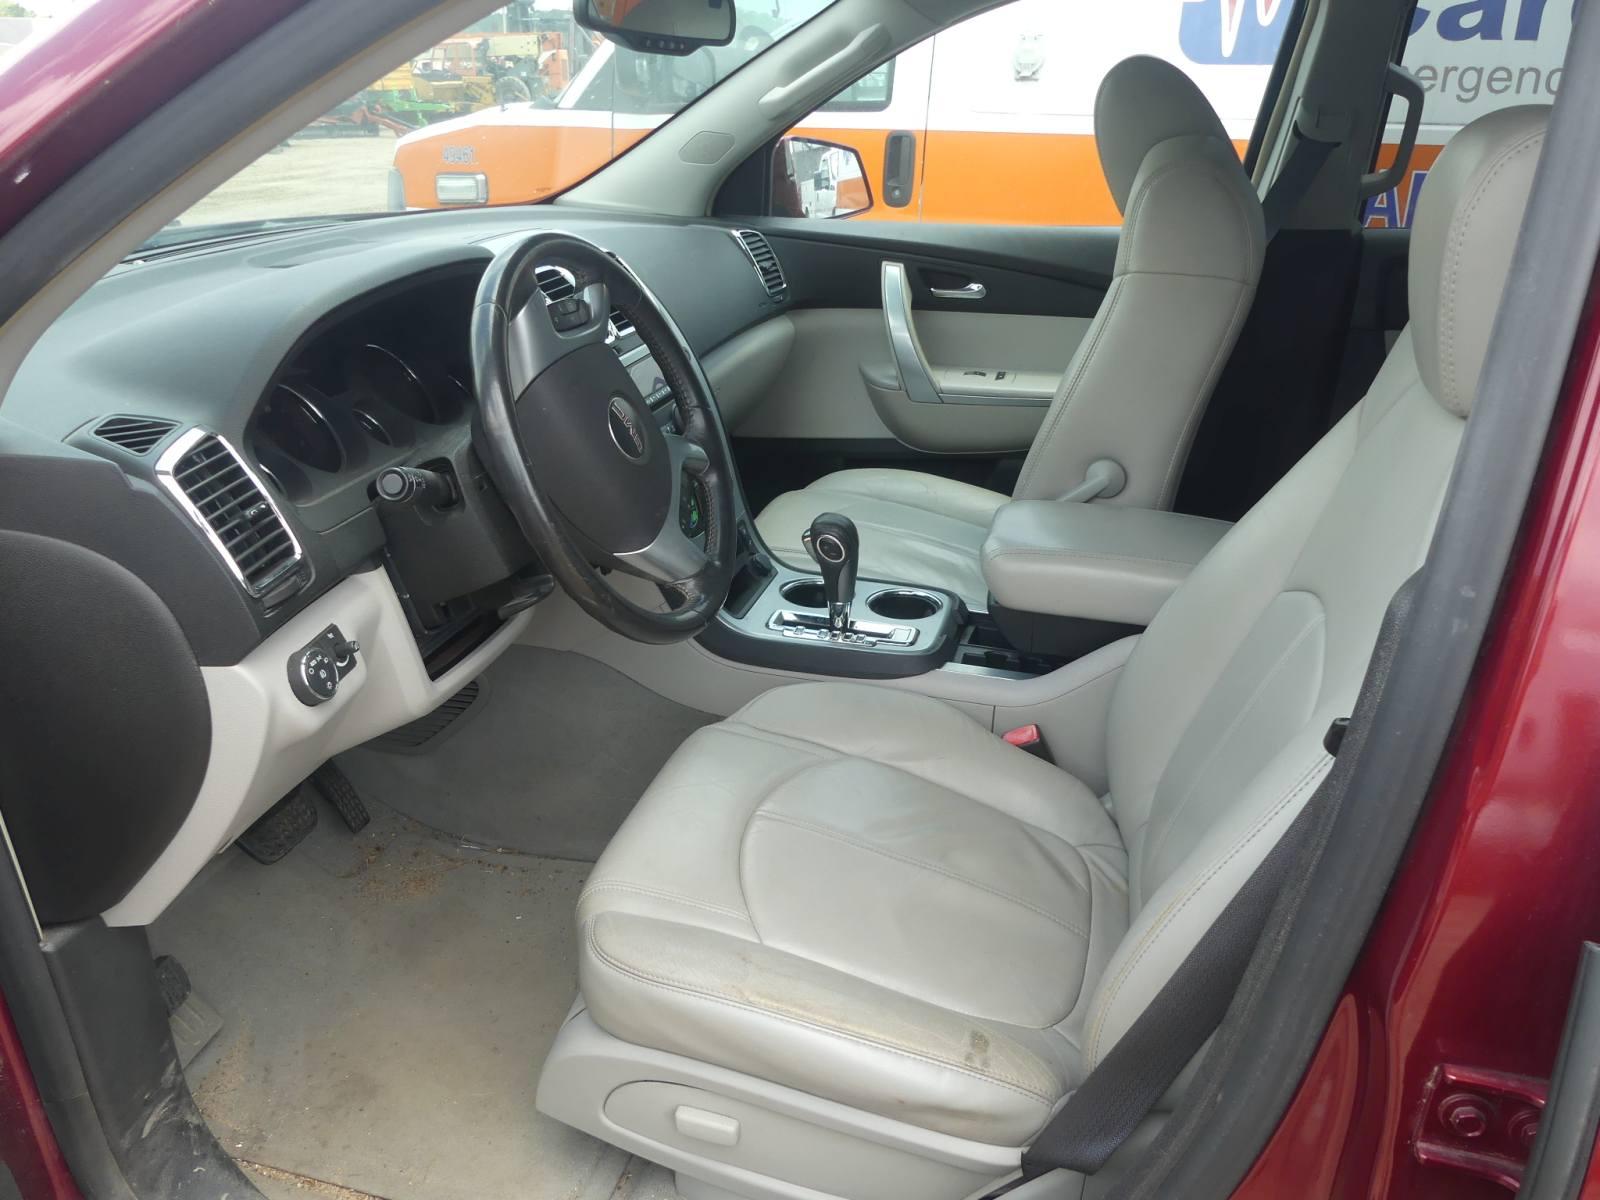 2008 GMC Acadia SUV, s/n 1GKER23728J110221 (Inoperable): 4-door, Sunroof